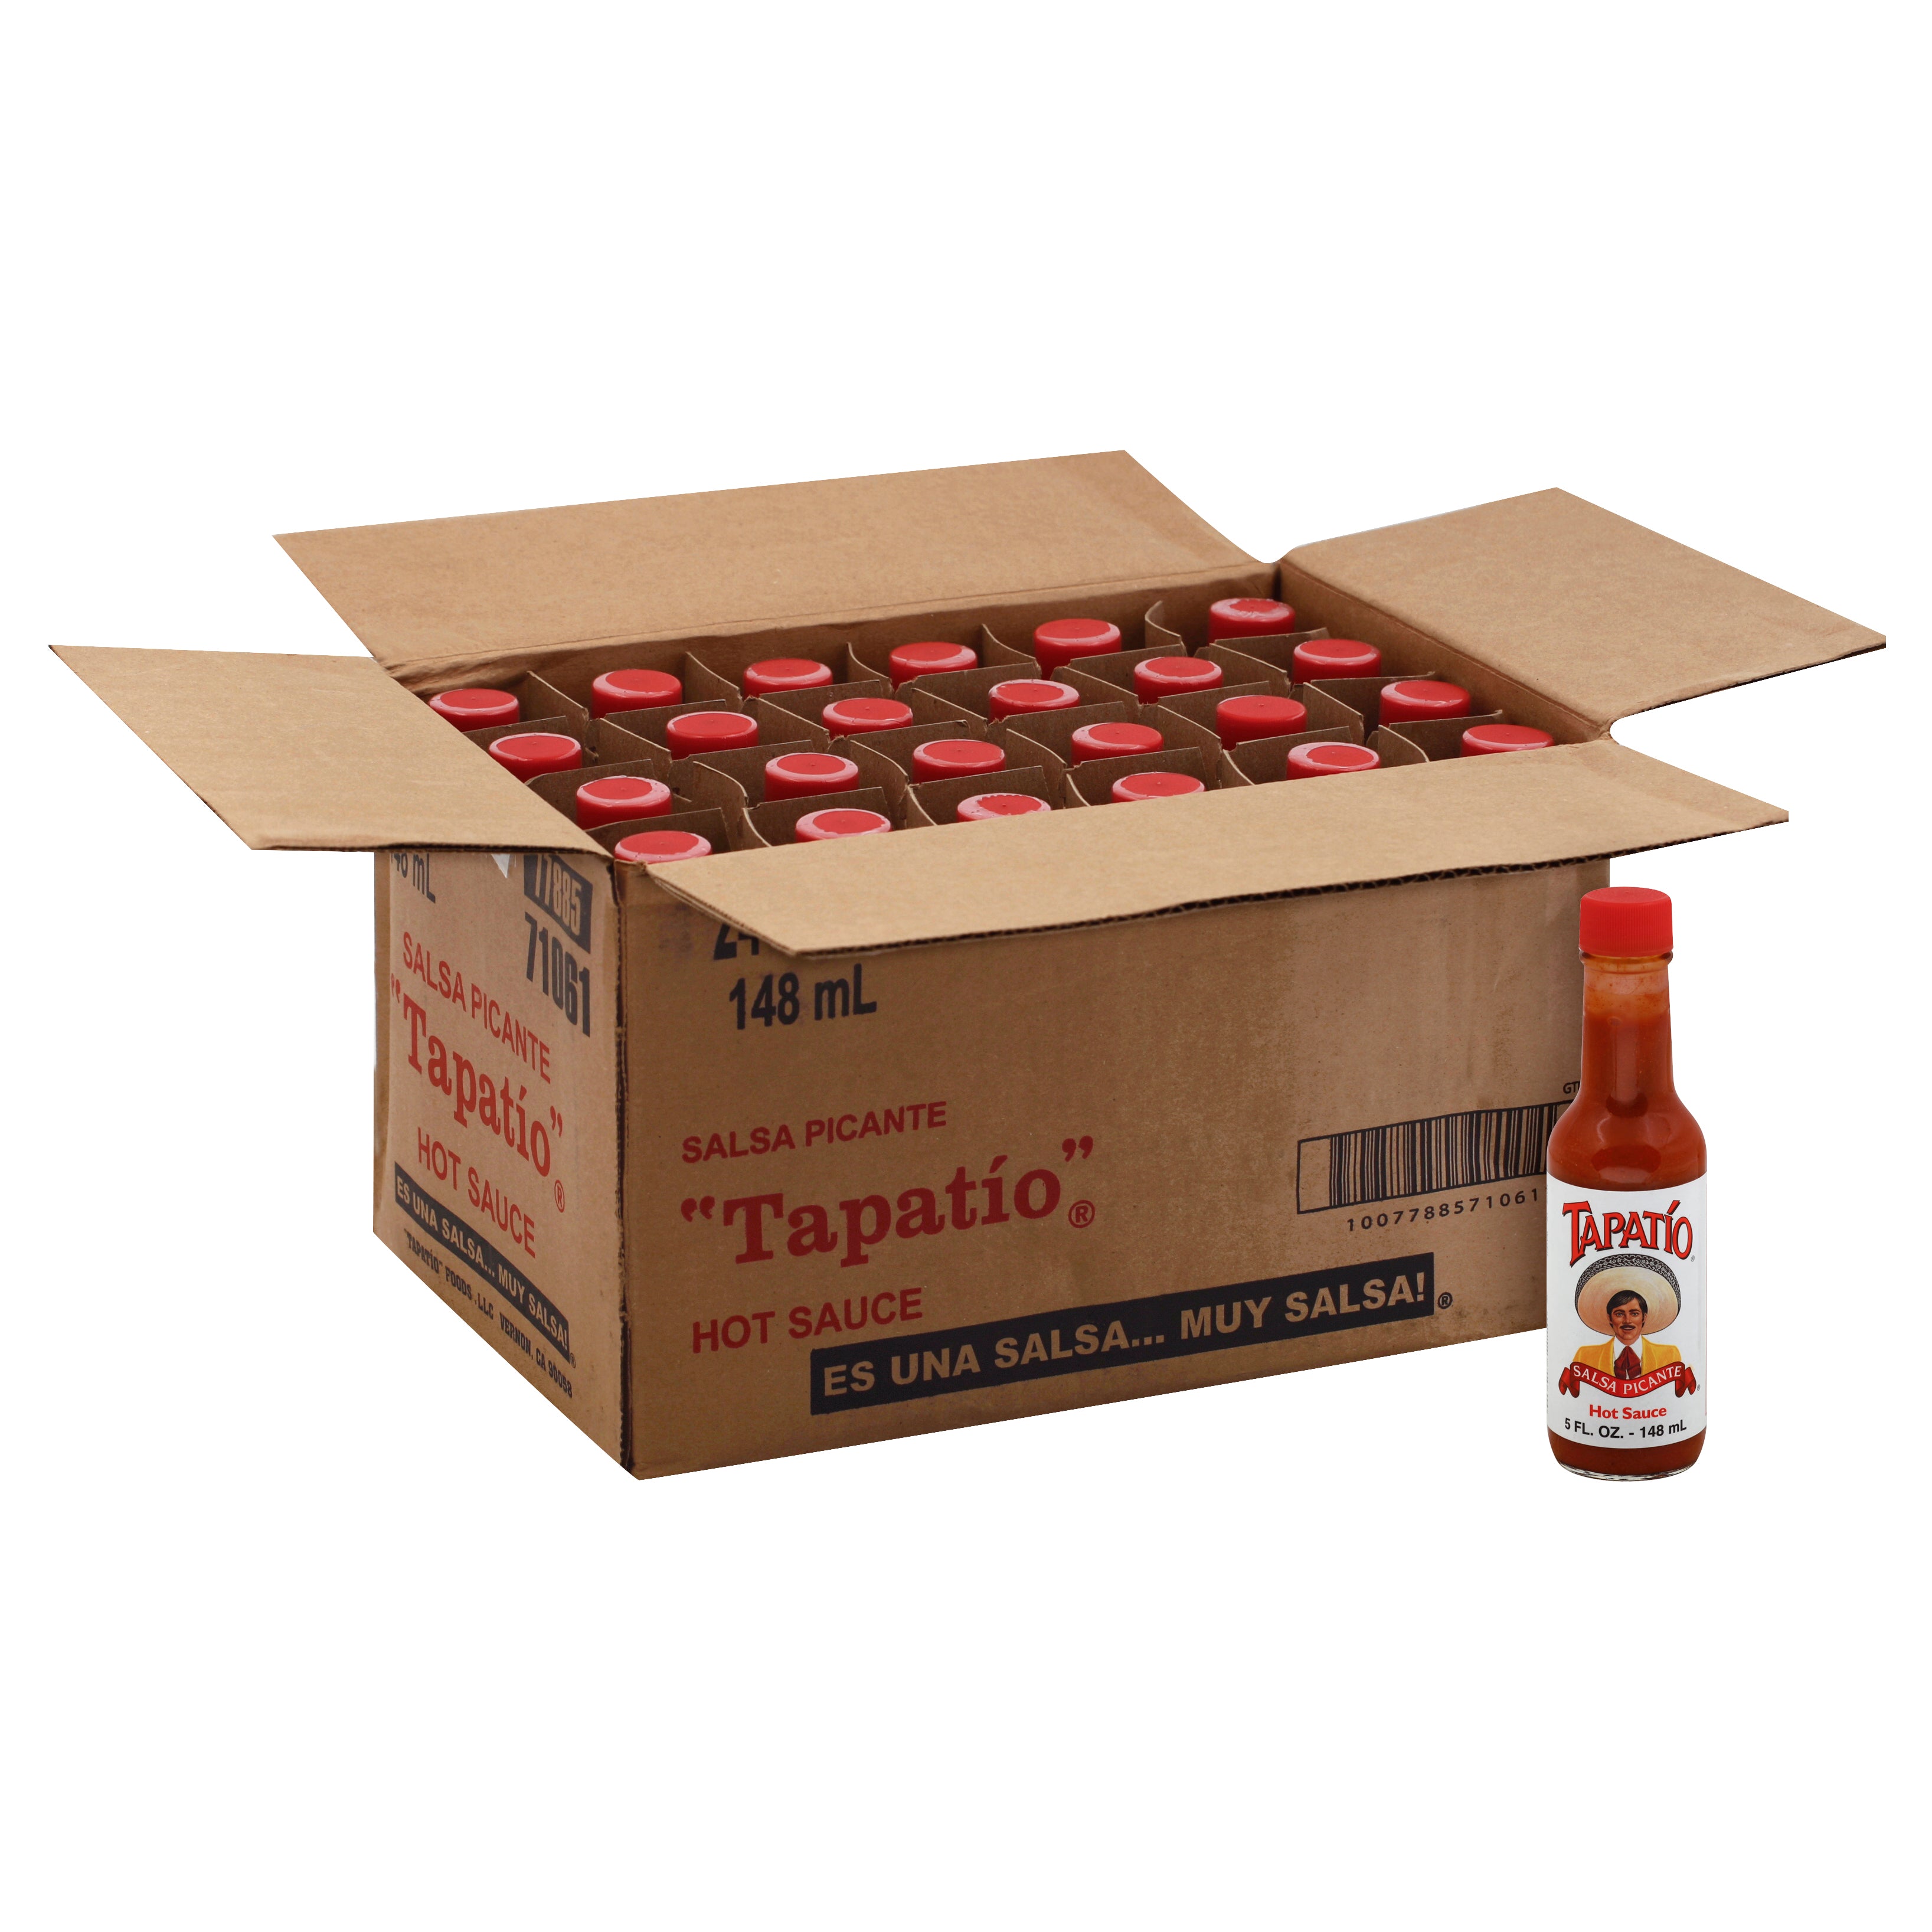 Trappey's Mexi-Pep Louisiana Hot Sauce, 6 Ounces (2 Bottles)